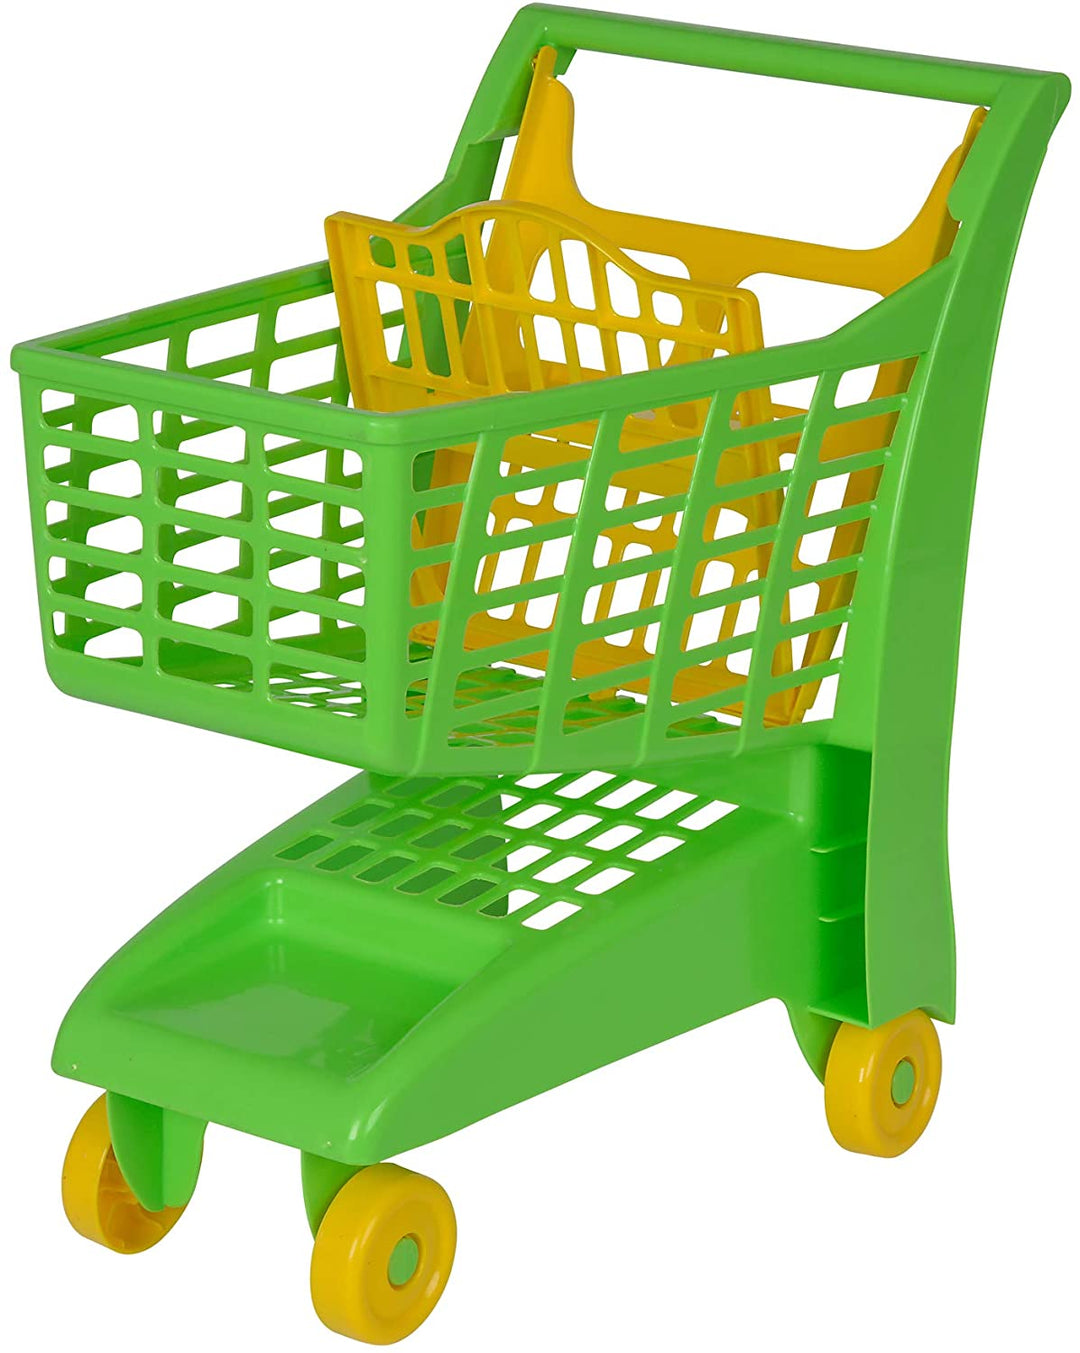 Mini Shopping Cart Assorted Colours